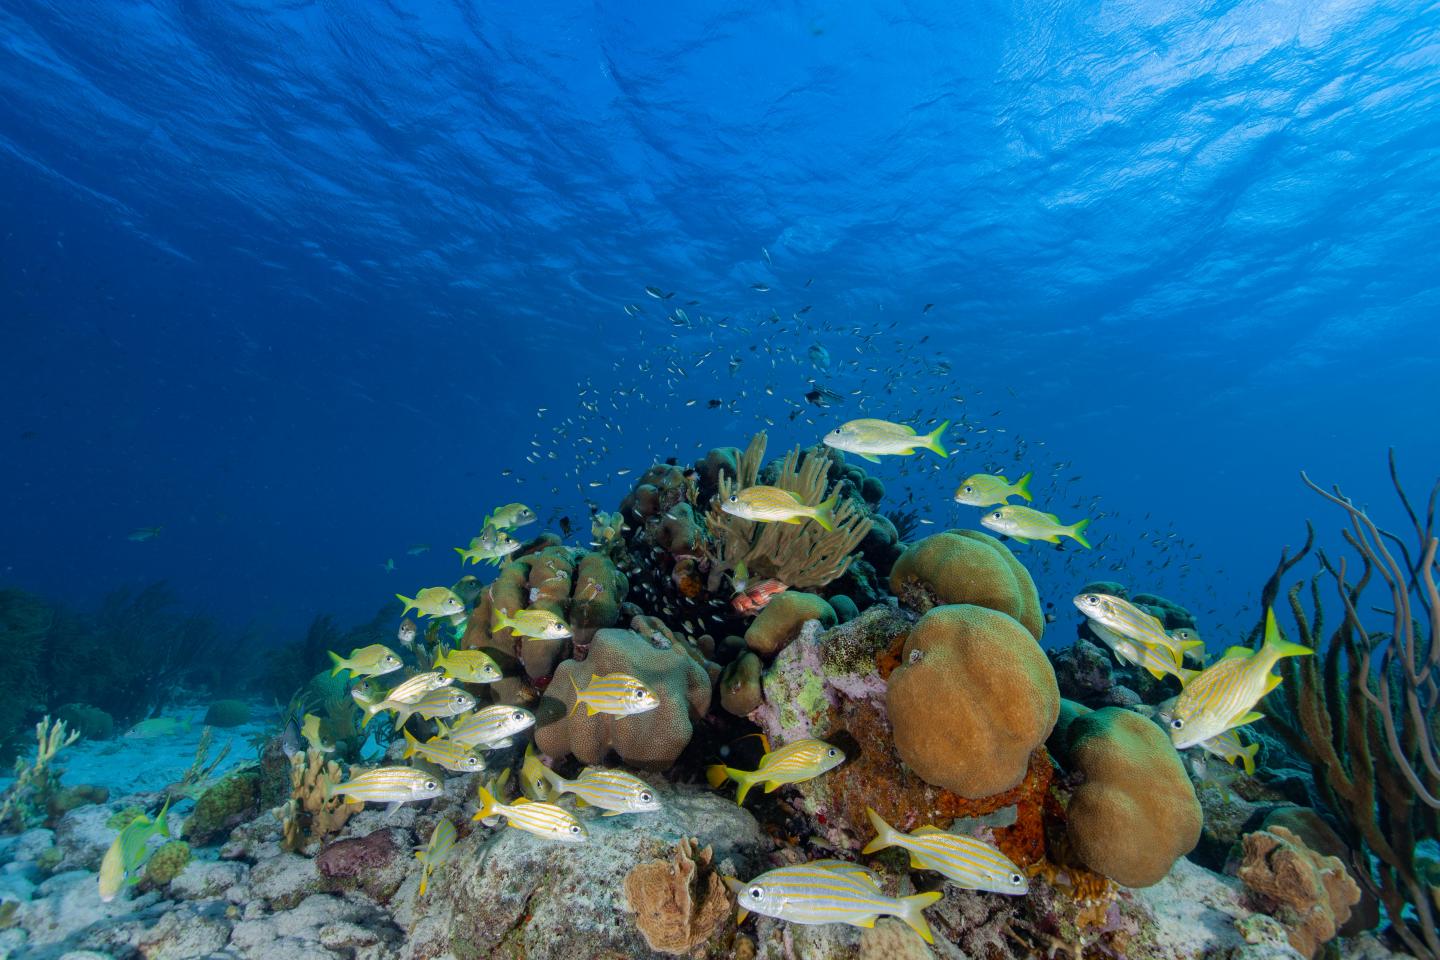 Carribbean Reef: